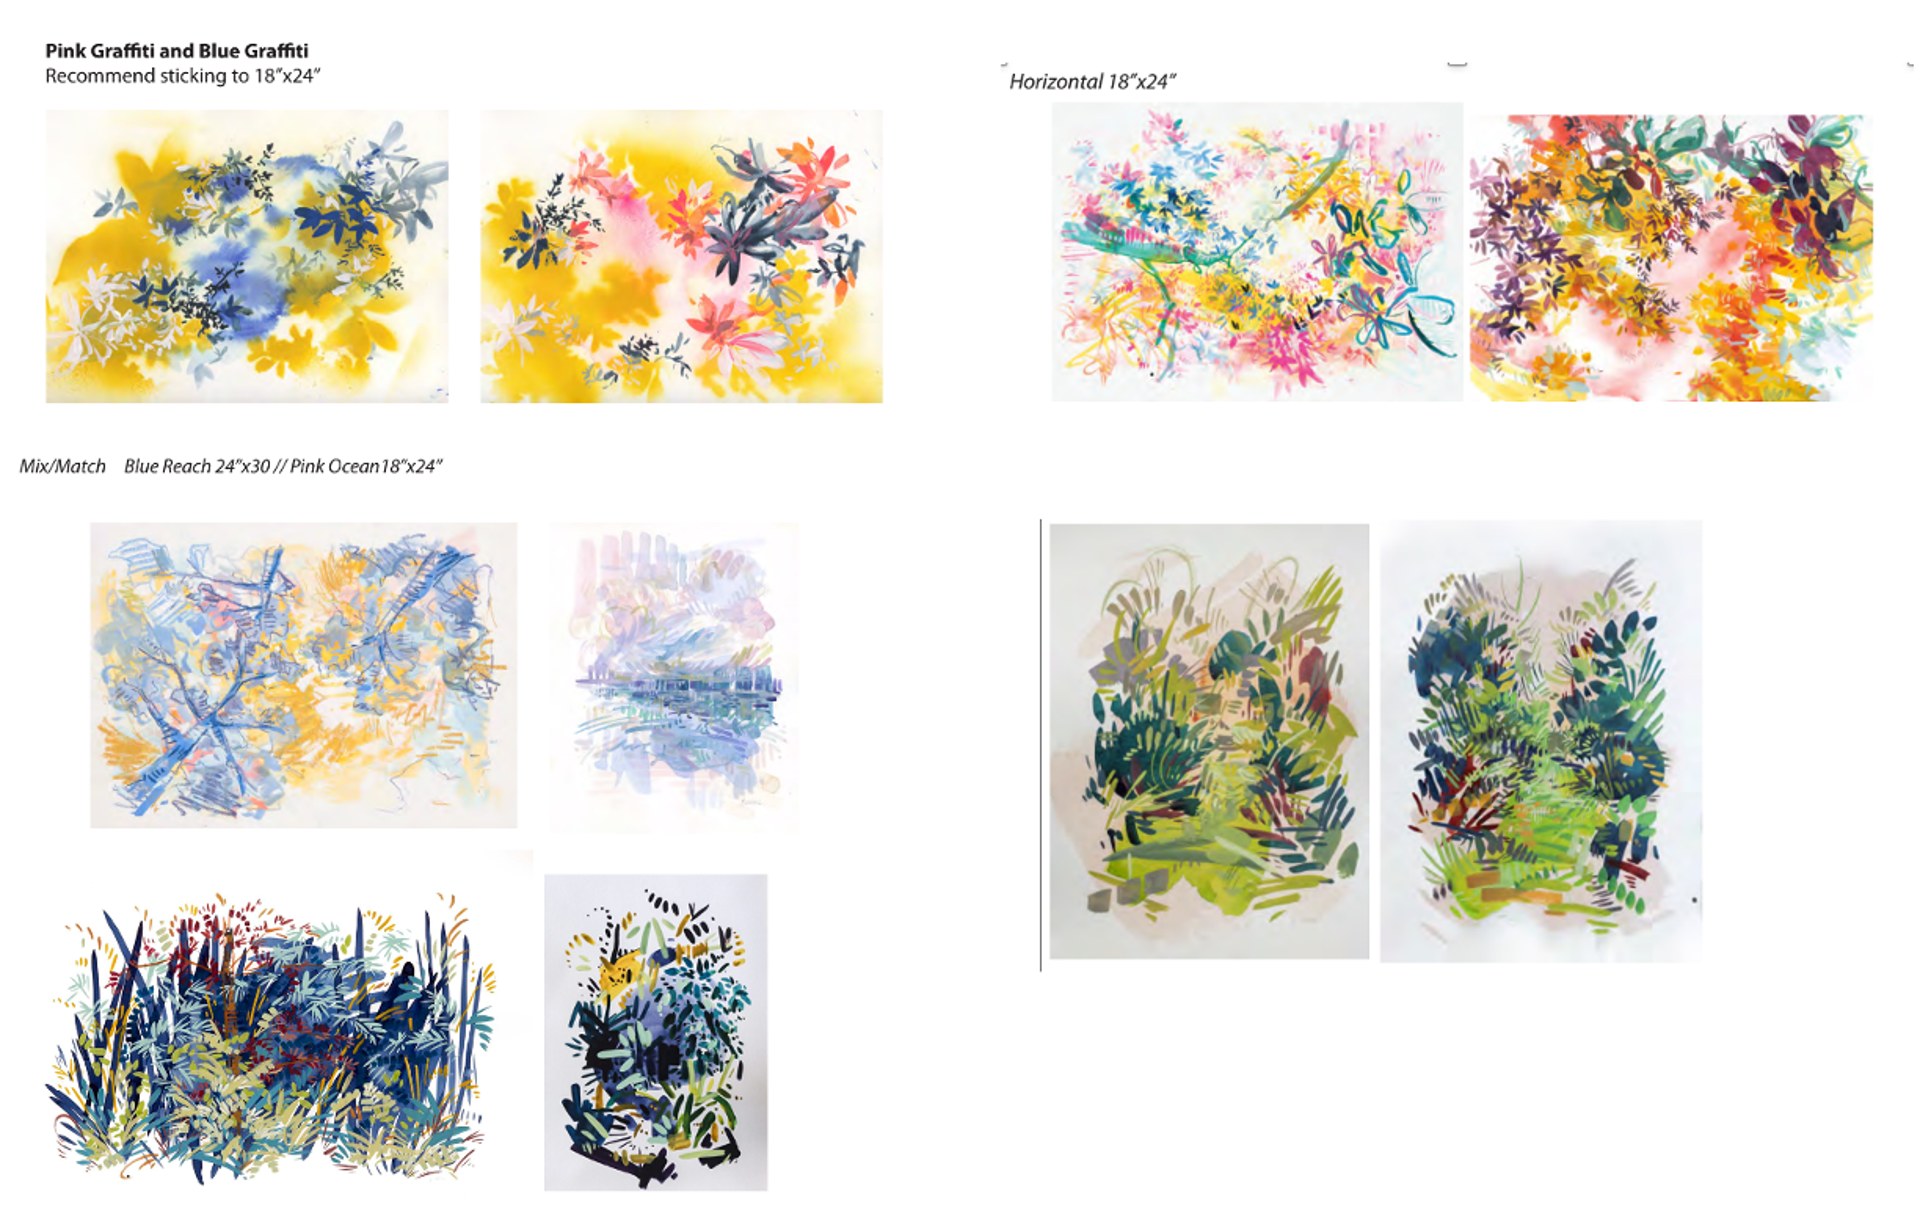 BMC CLAY (5) sets of prints by Kristin Chronic